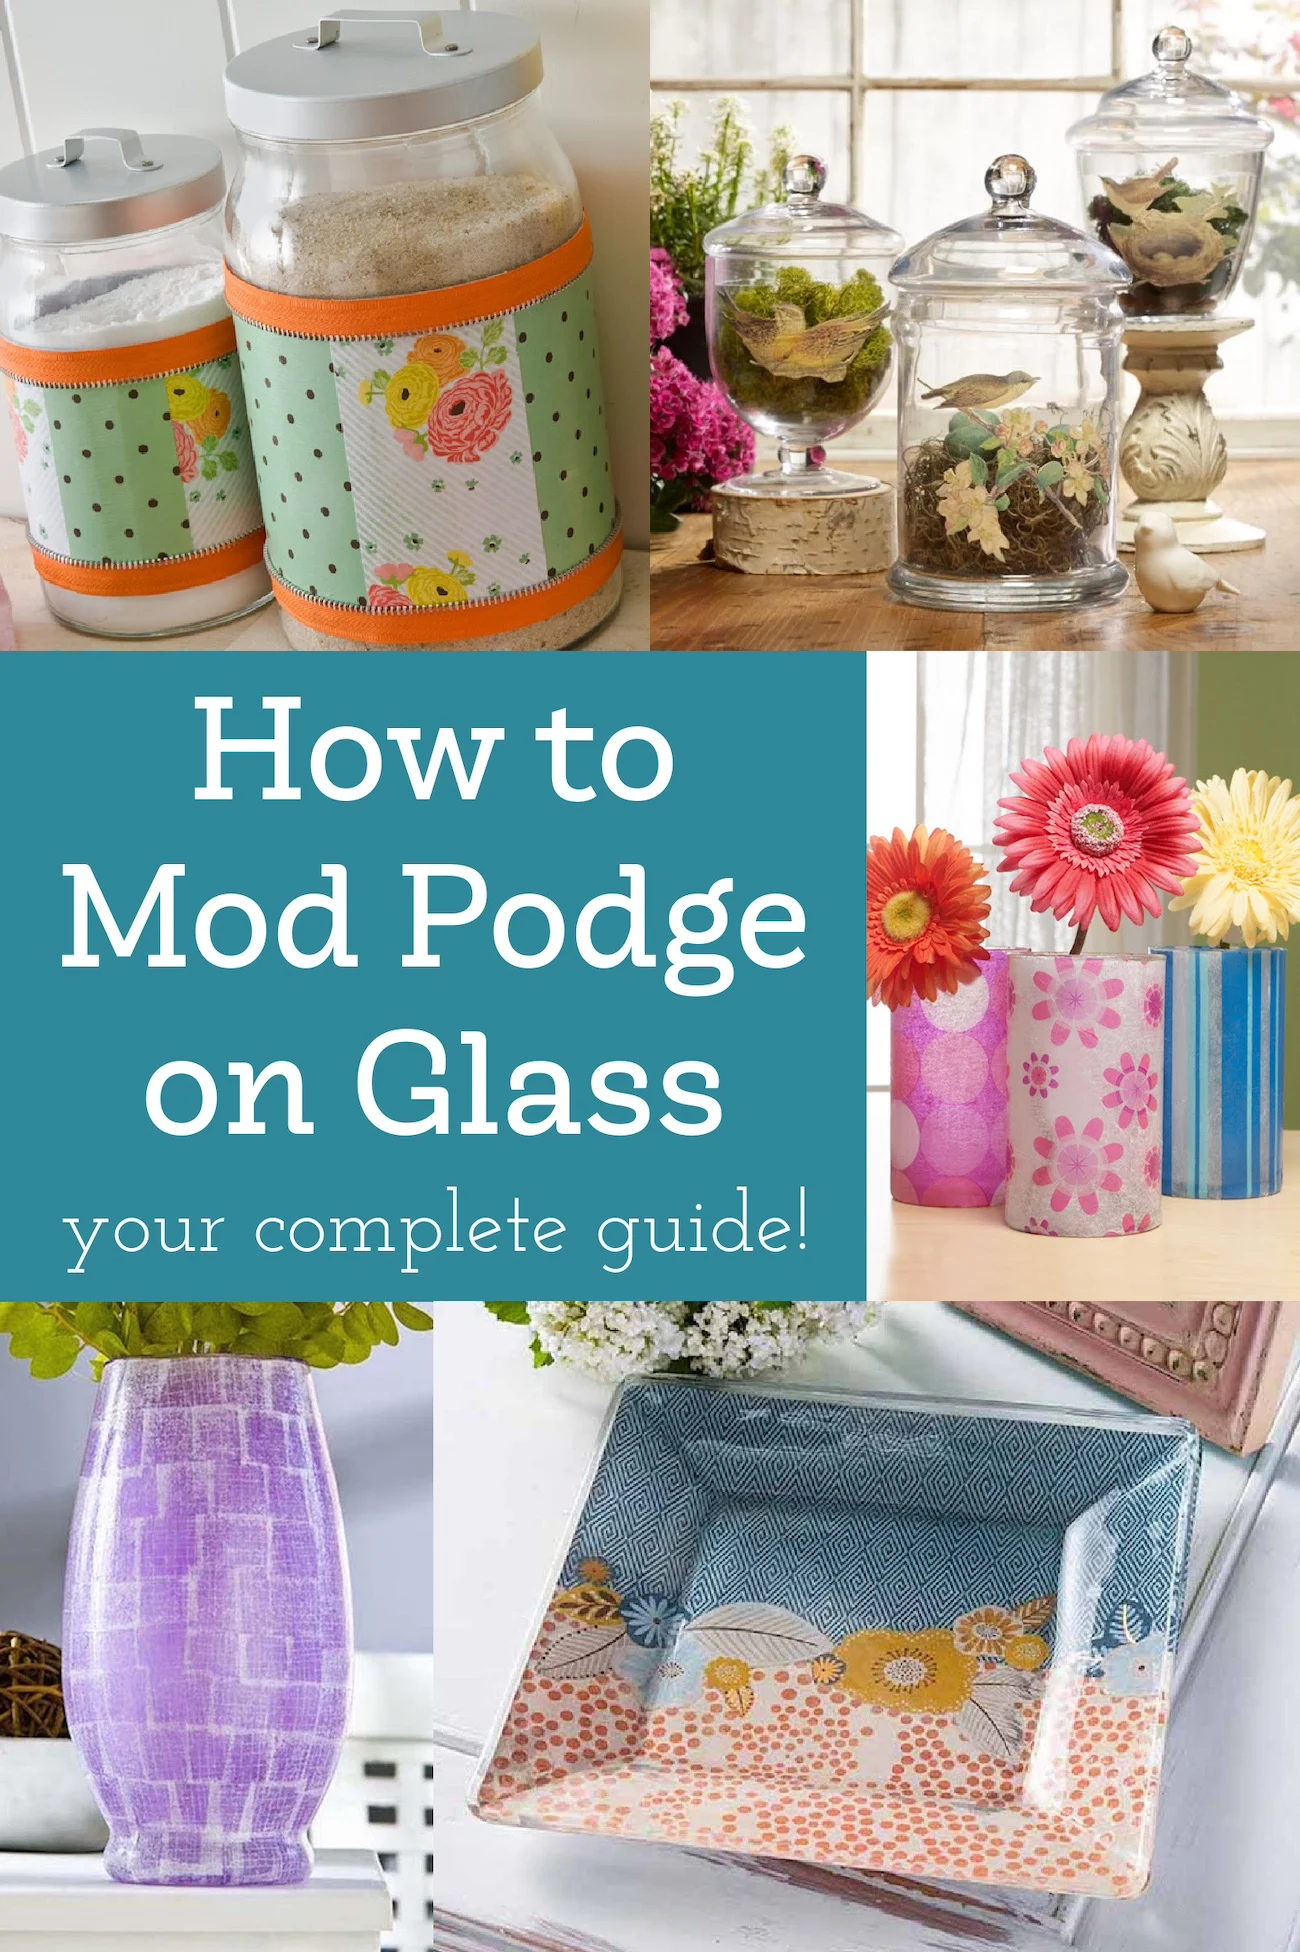 Modge Podge Napkins: Elevate Your Glassware in 9 Easy Steps